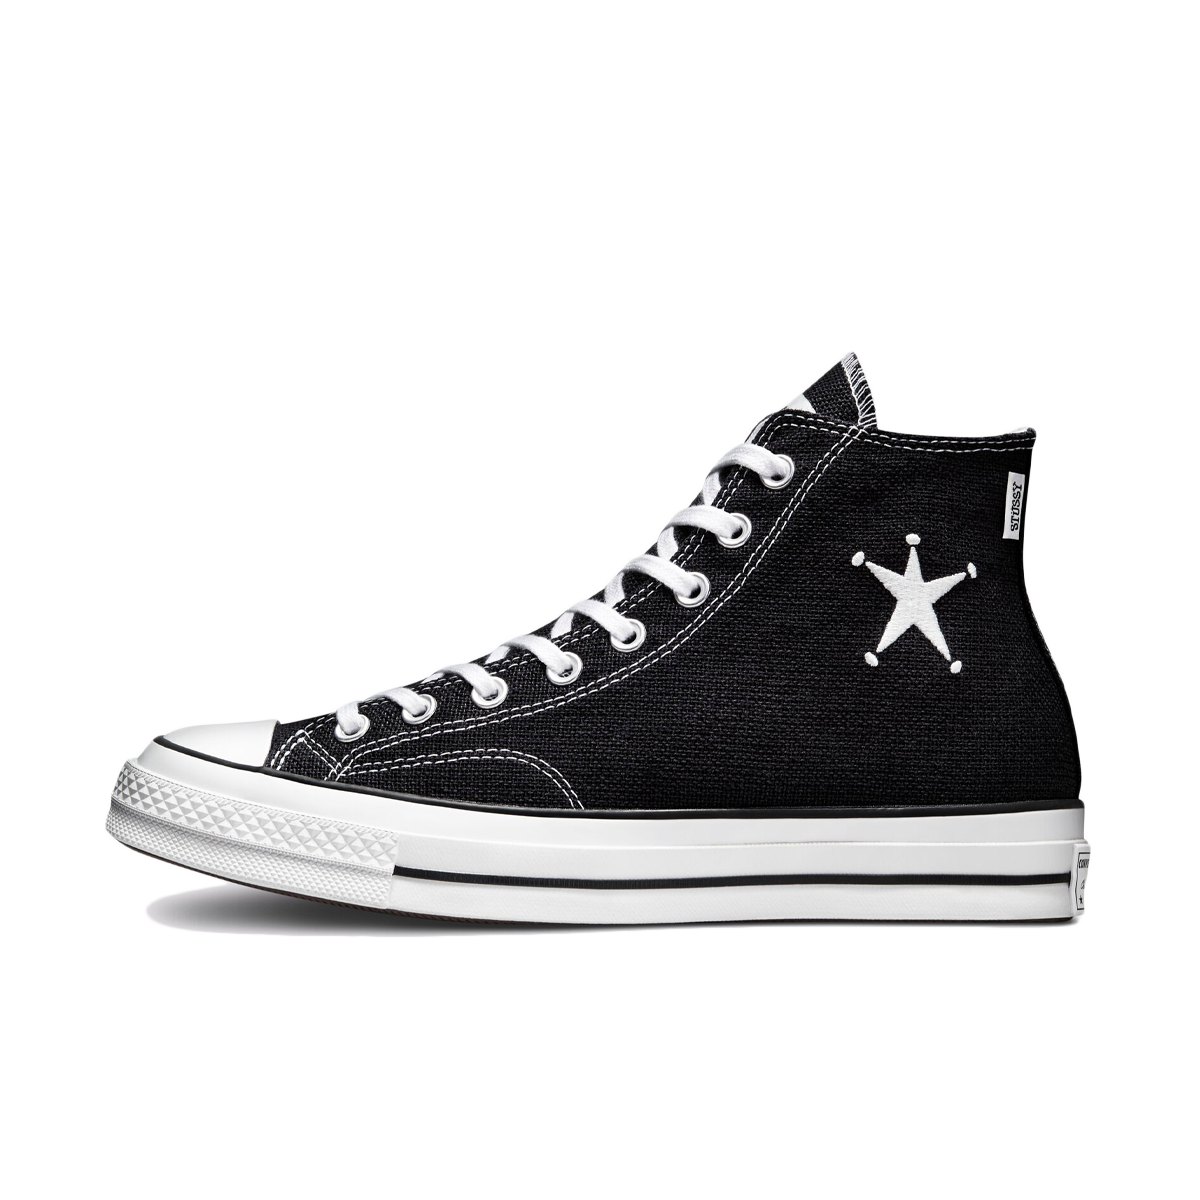 Stüssy x Converse Chuck 70 'Black' A01765C